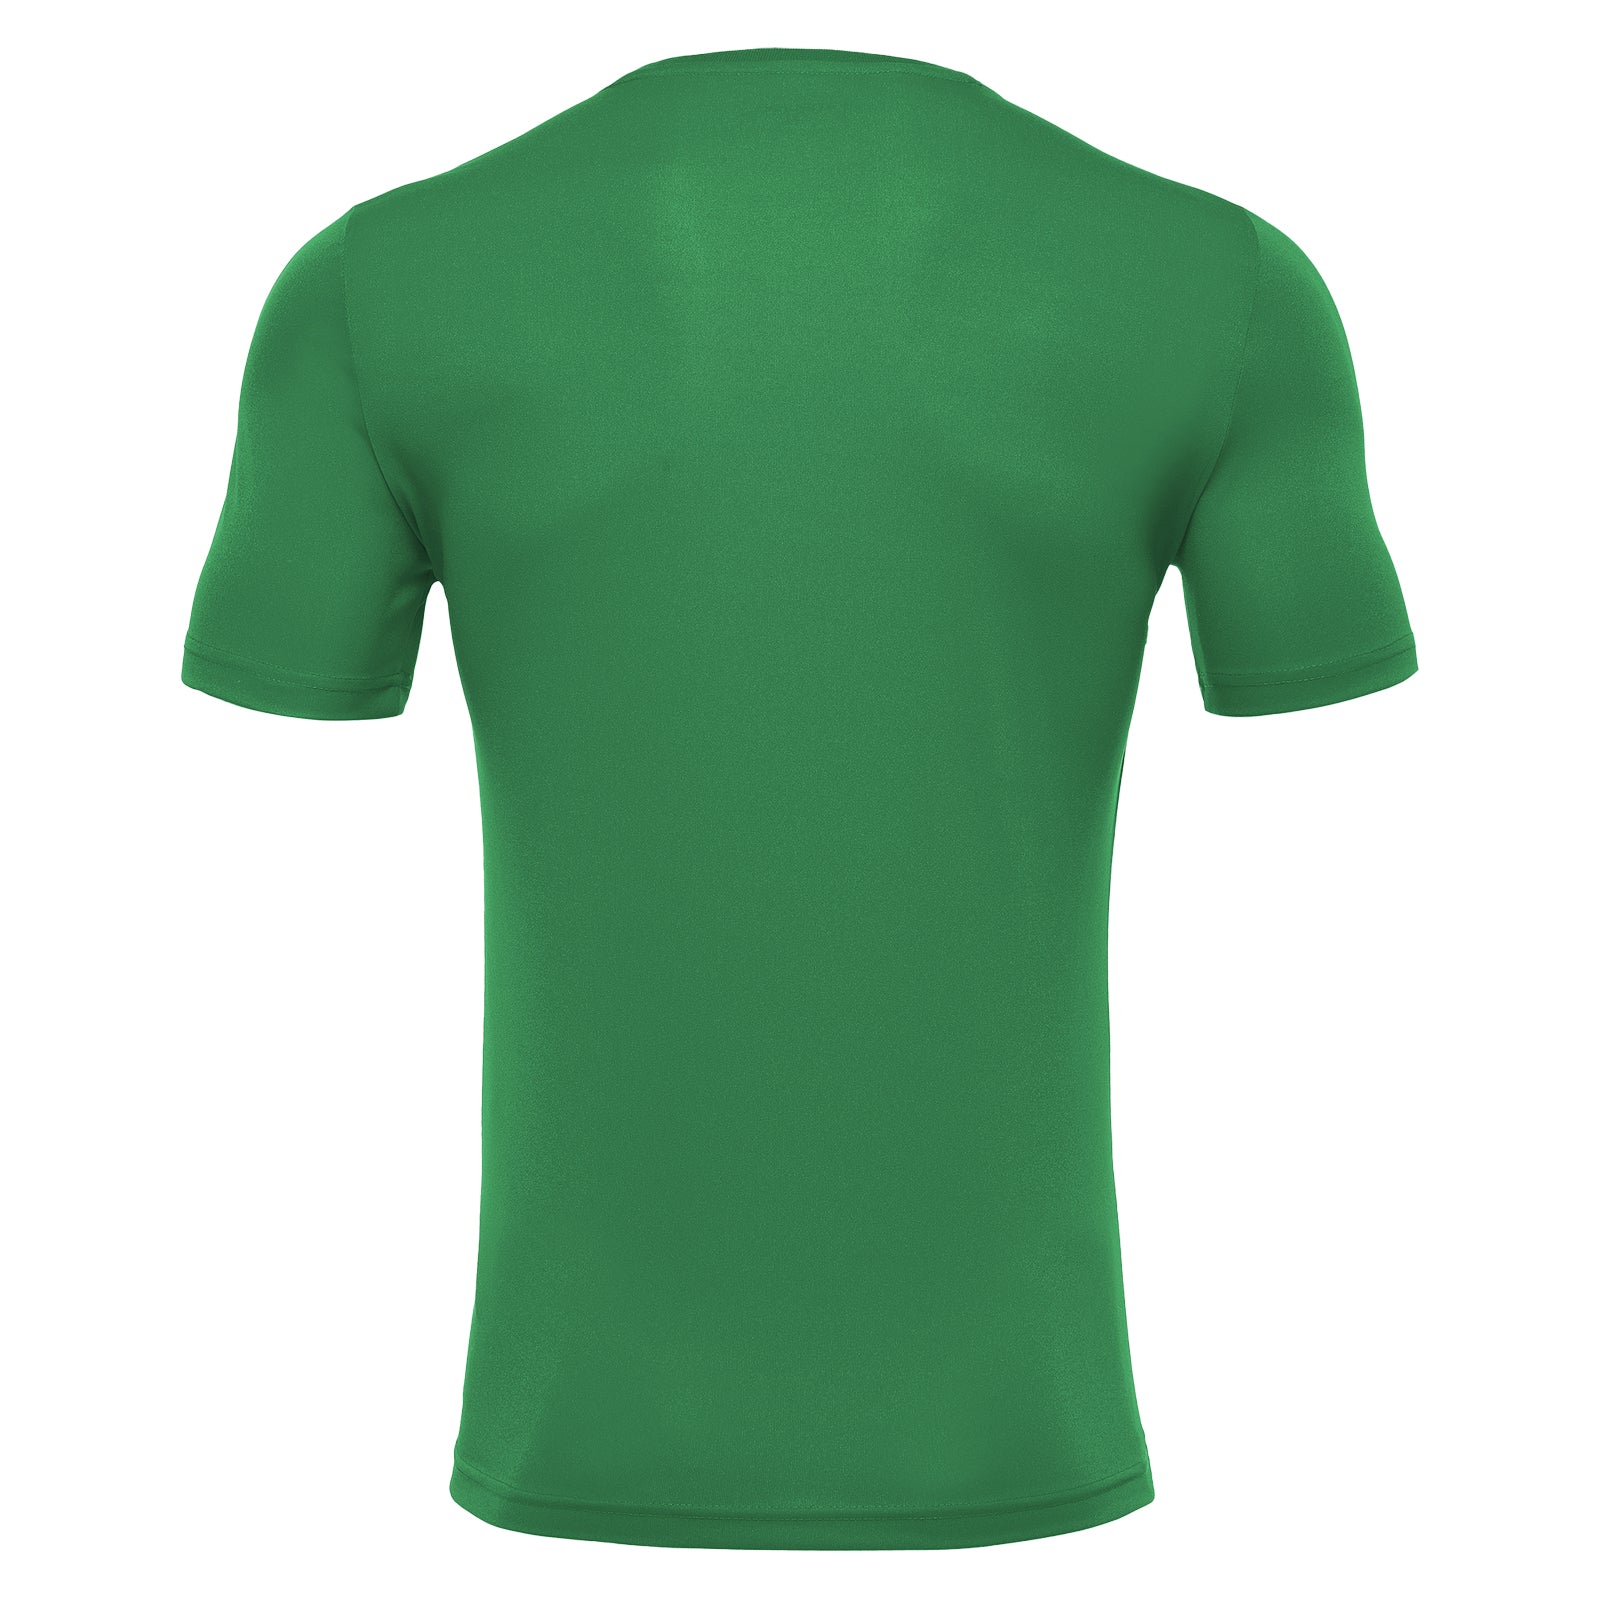 Photo of Irish Squash Unisex 'Rigel' Match Day Shirt, back view